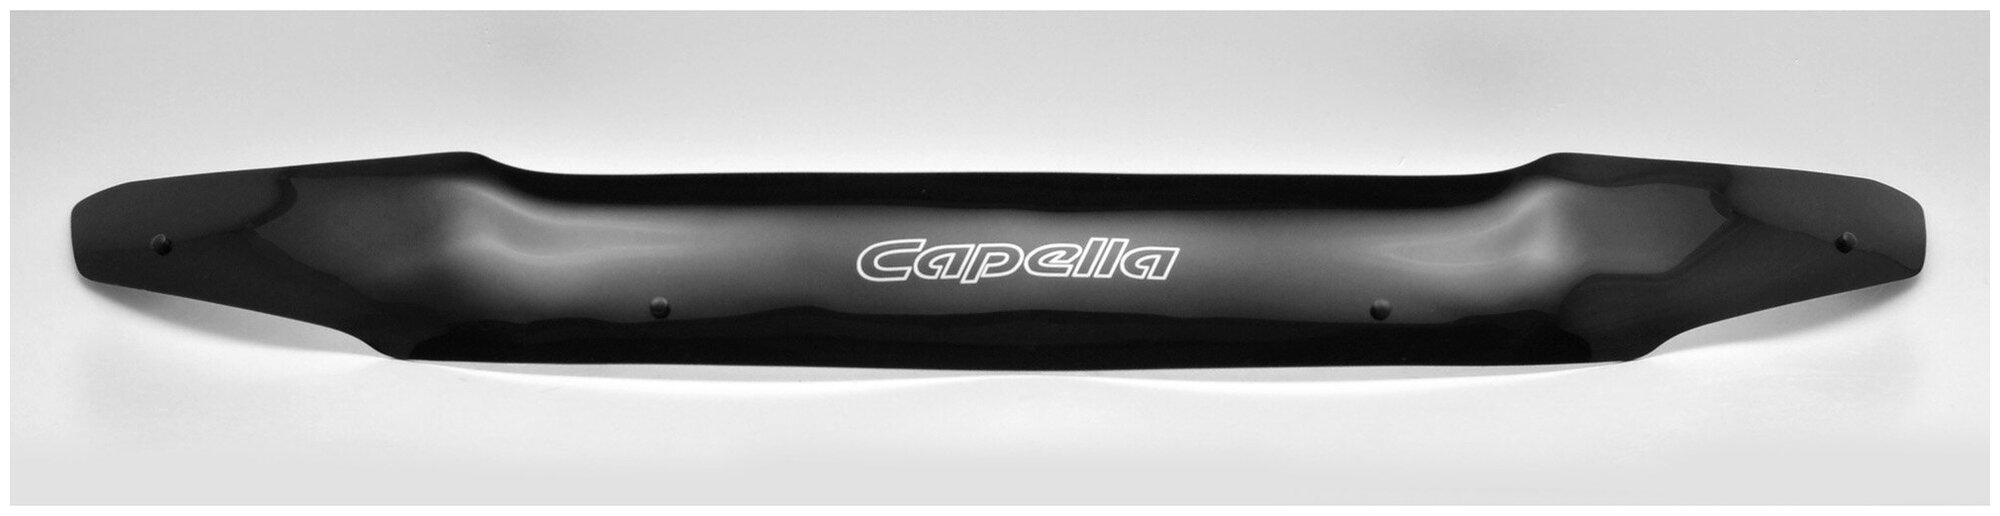 Defly Дефлектор капота Mazda Capella,1999-2002, рестайлинг